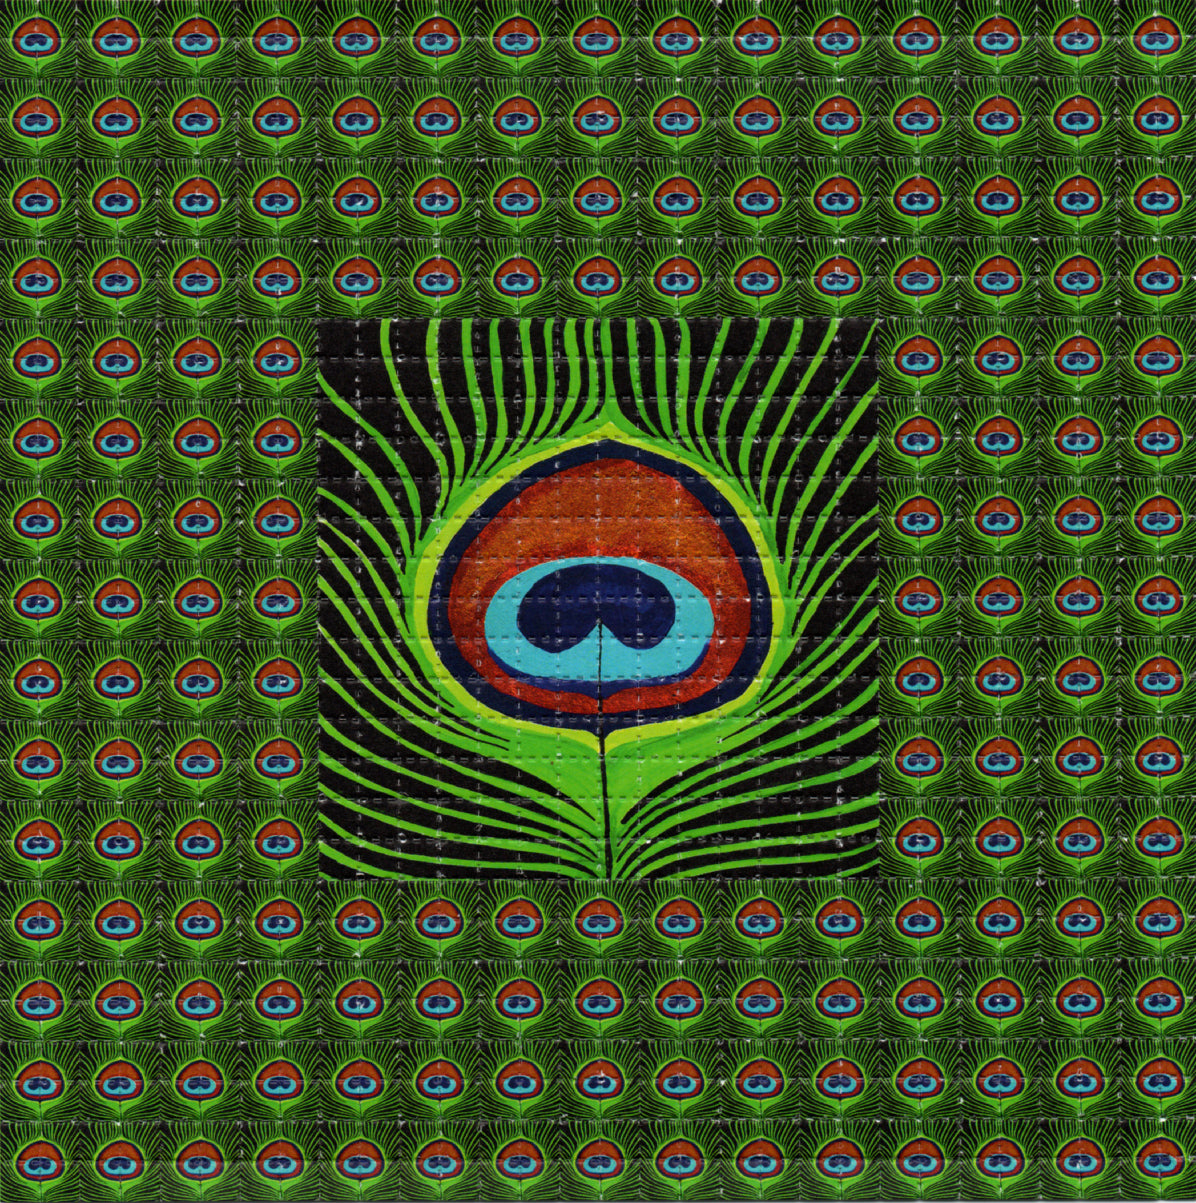 Peacock Feathers LSD blotter art print